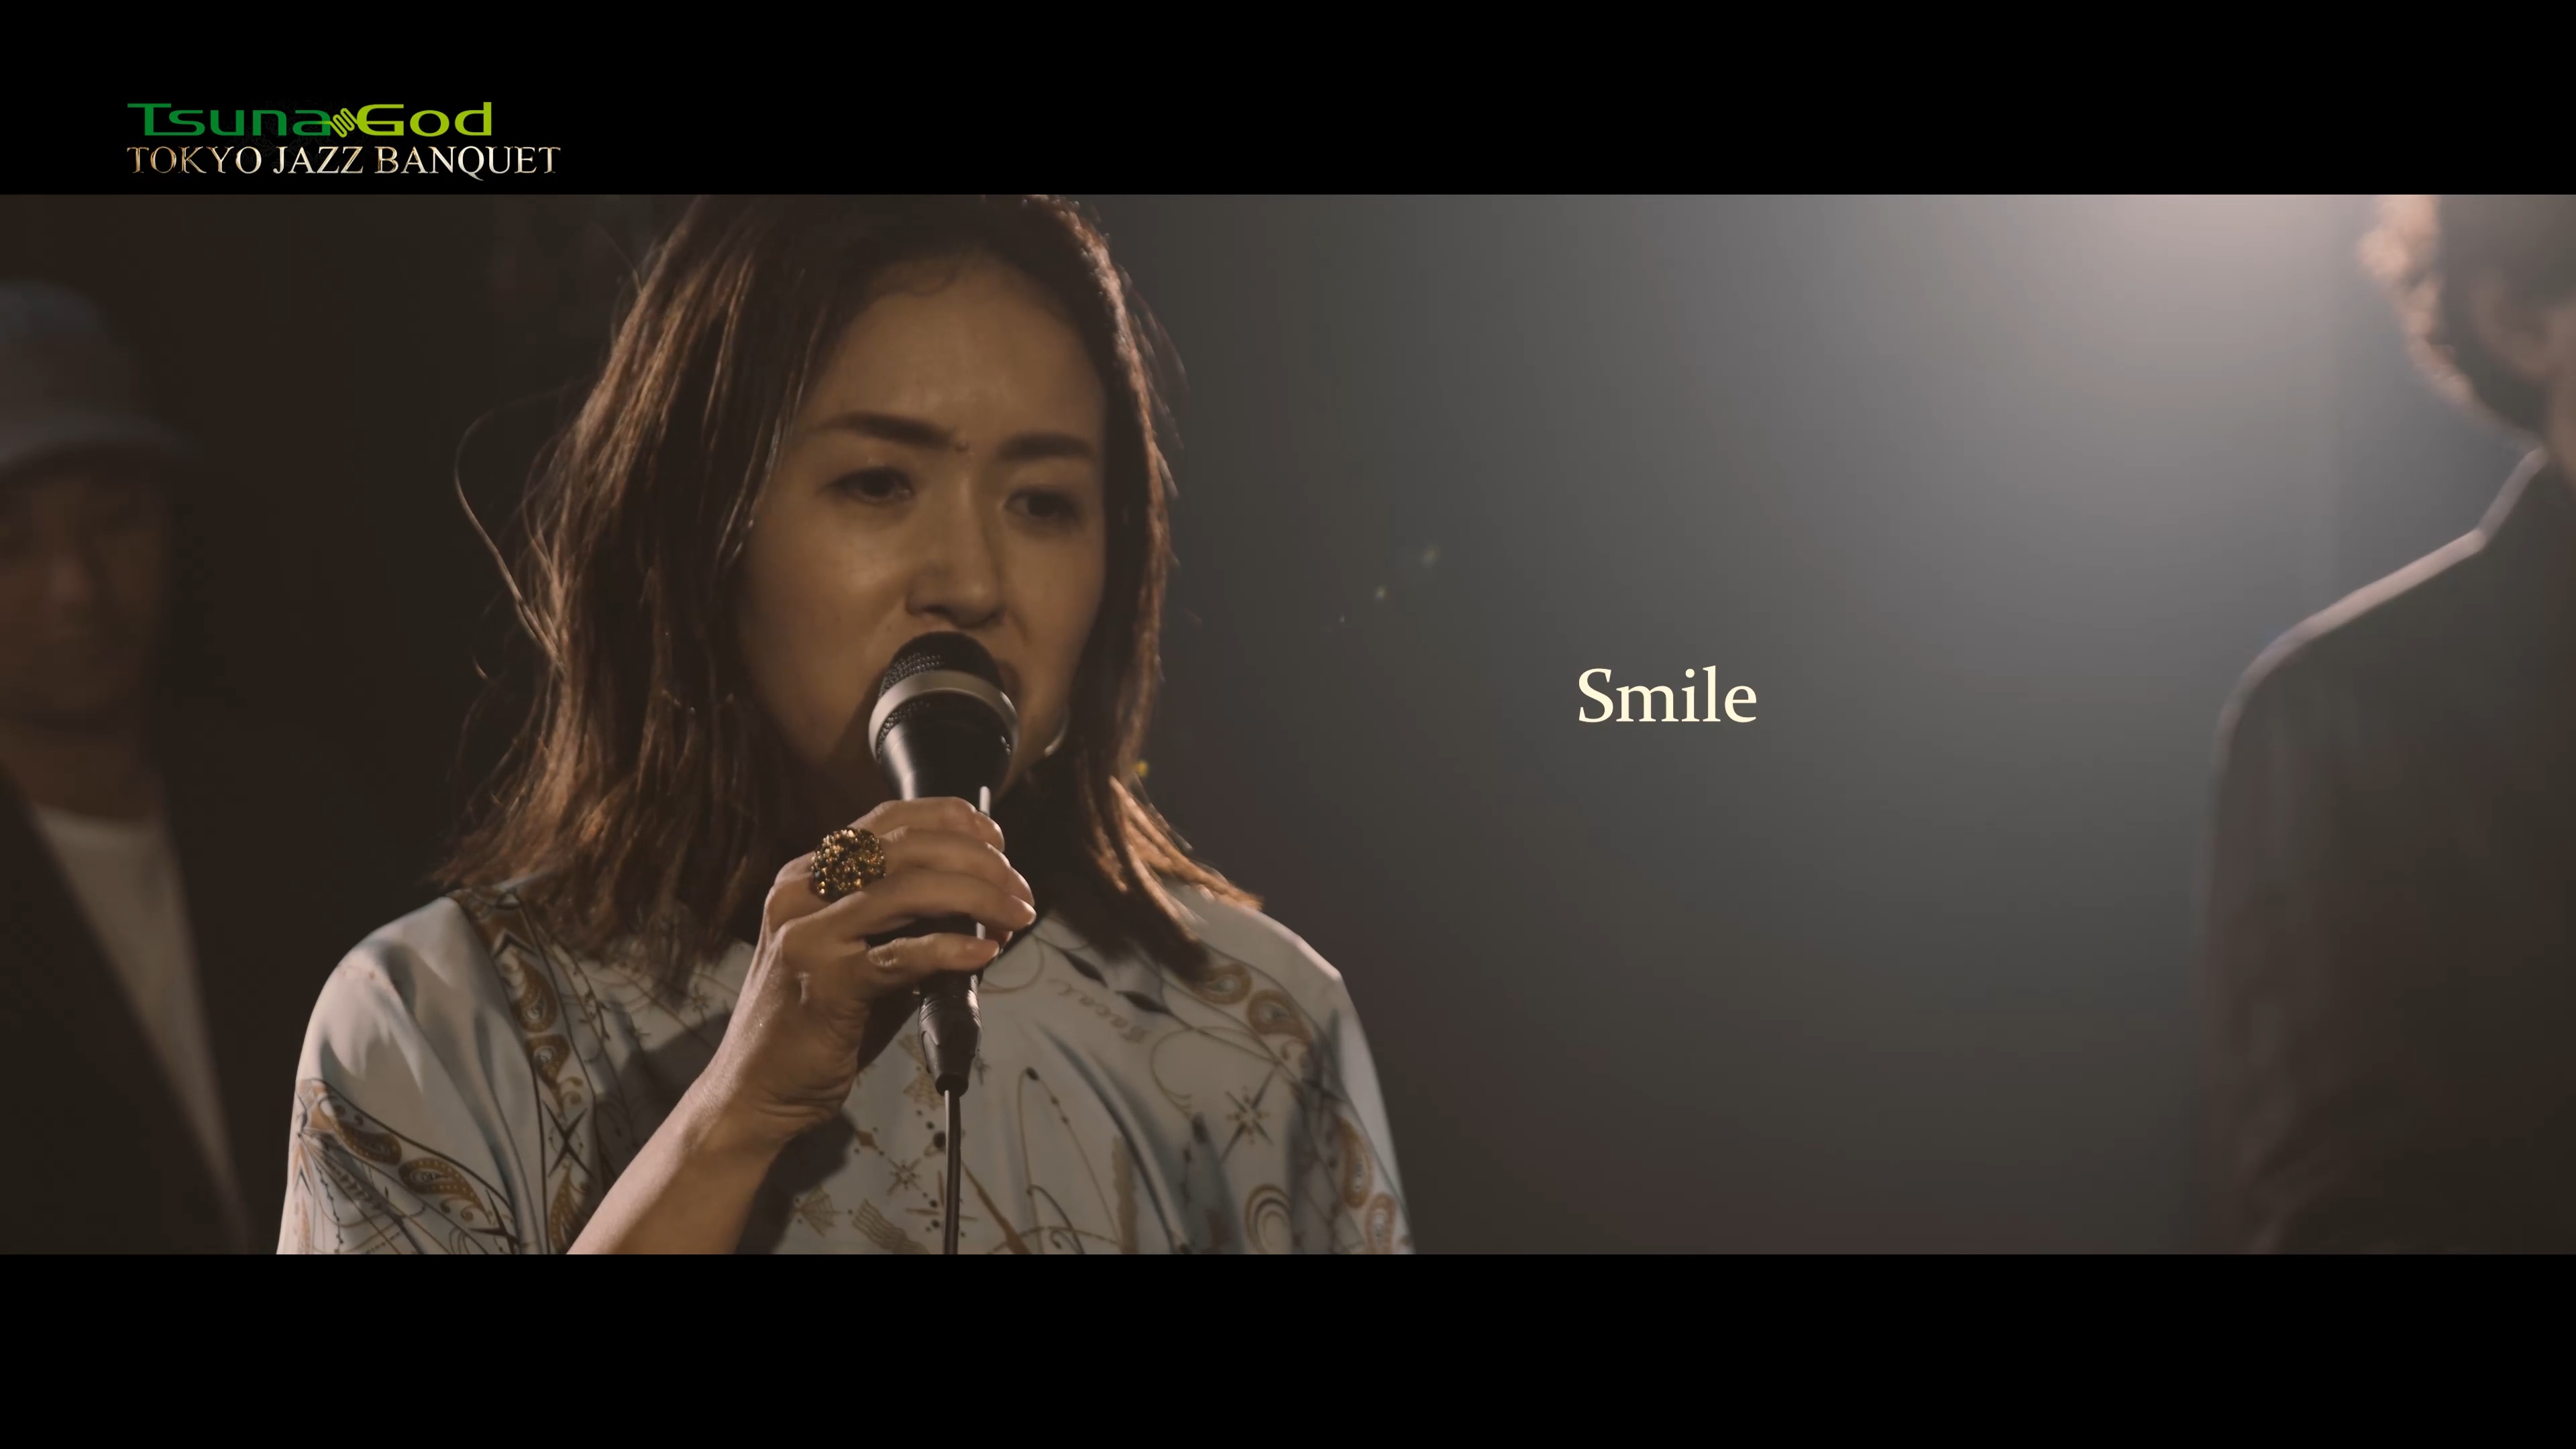 TOKYO JAZZ BANQUET Vol.5 “ Smile ”